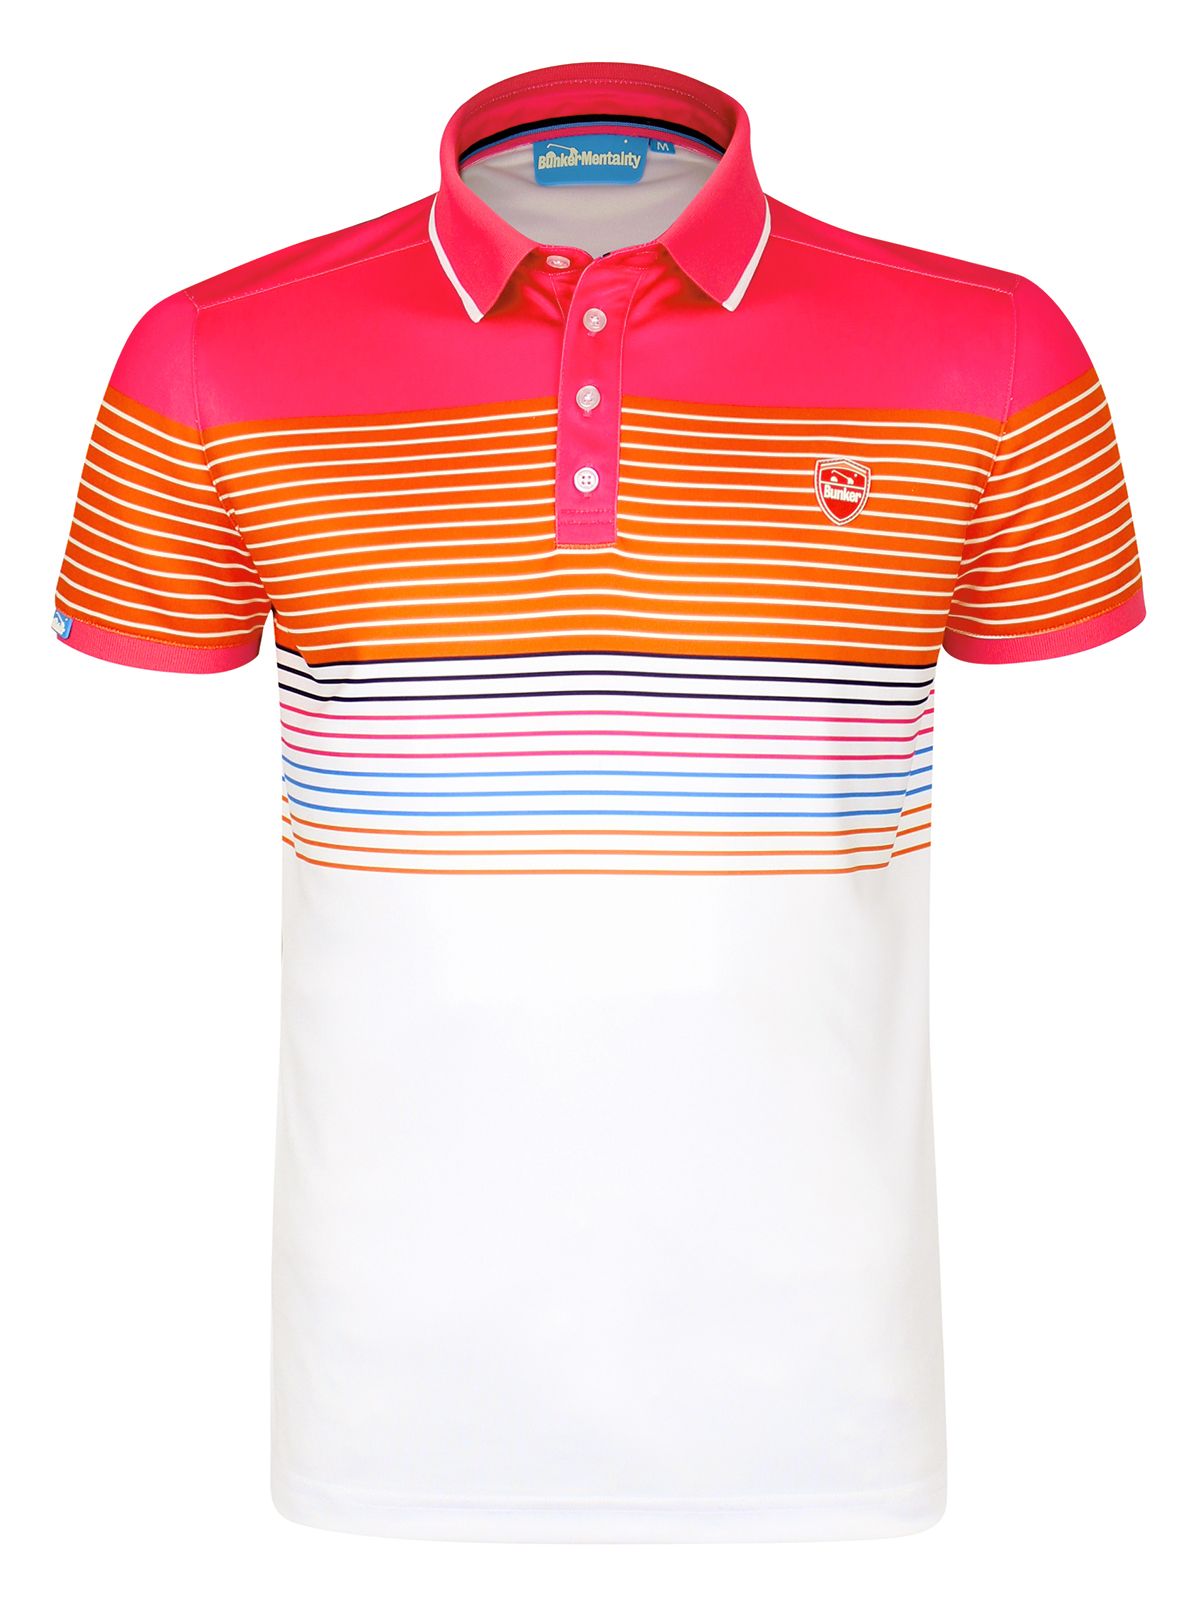 CMAX Krew Stripe Polyester Polo Shirt - Pink -X-Small (sample)